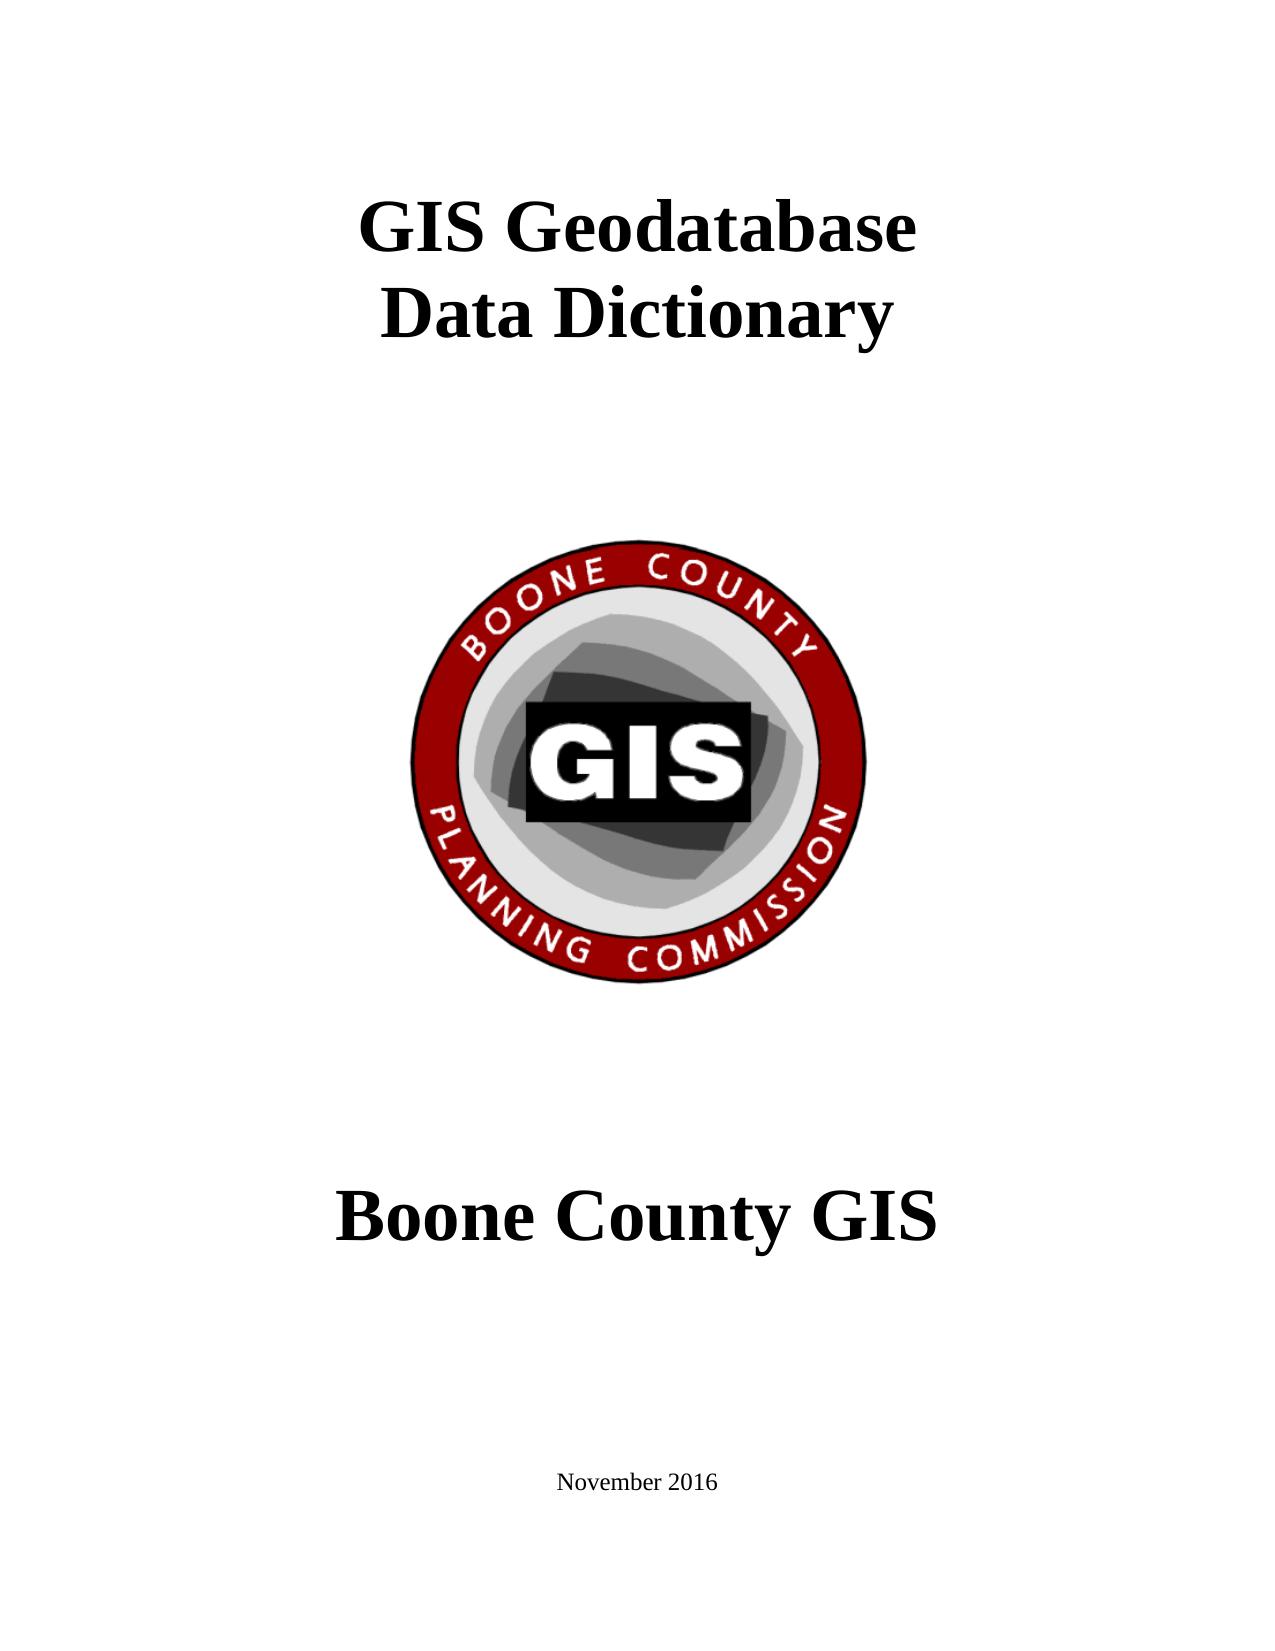 GIS Geodatabase Data Dictionary 2016